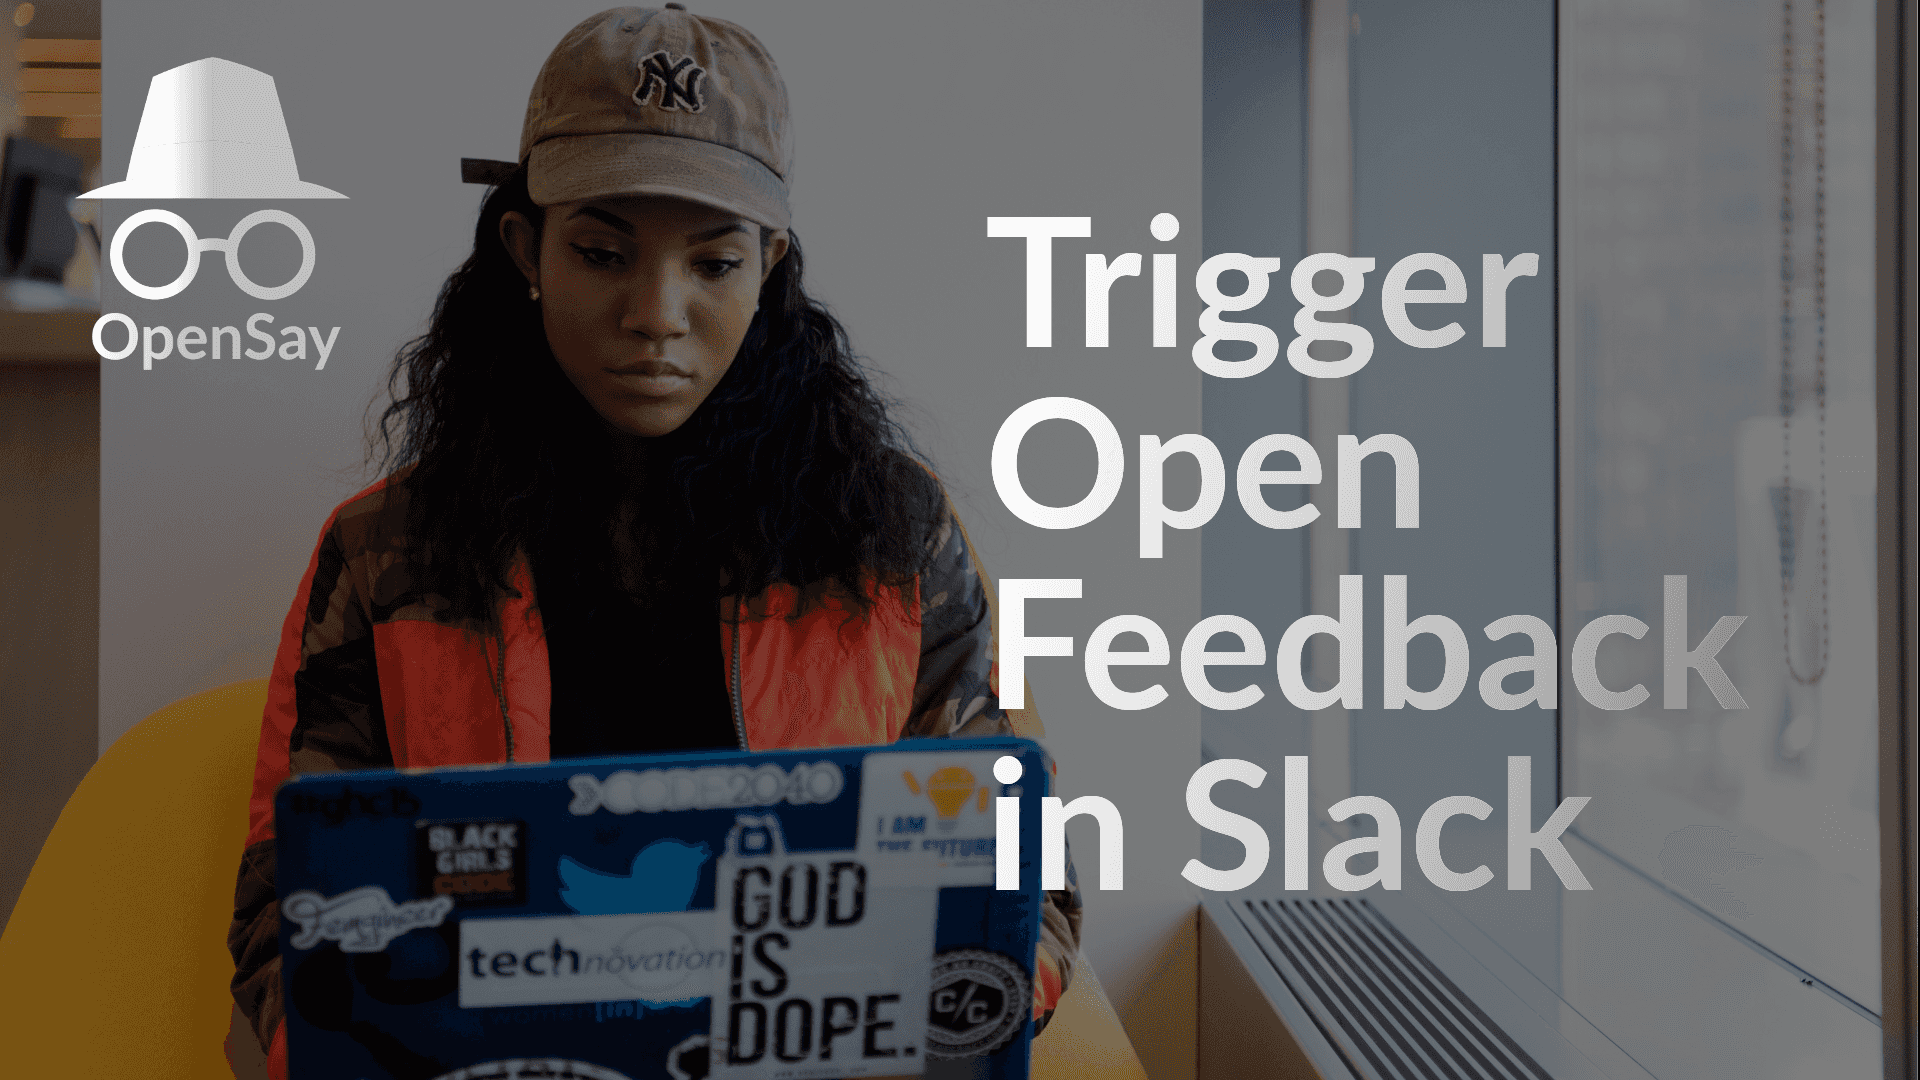 Trigger Open Feedback in Slack